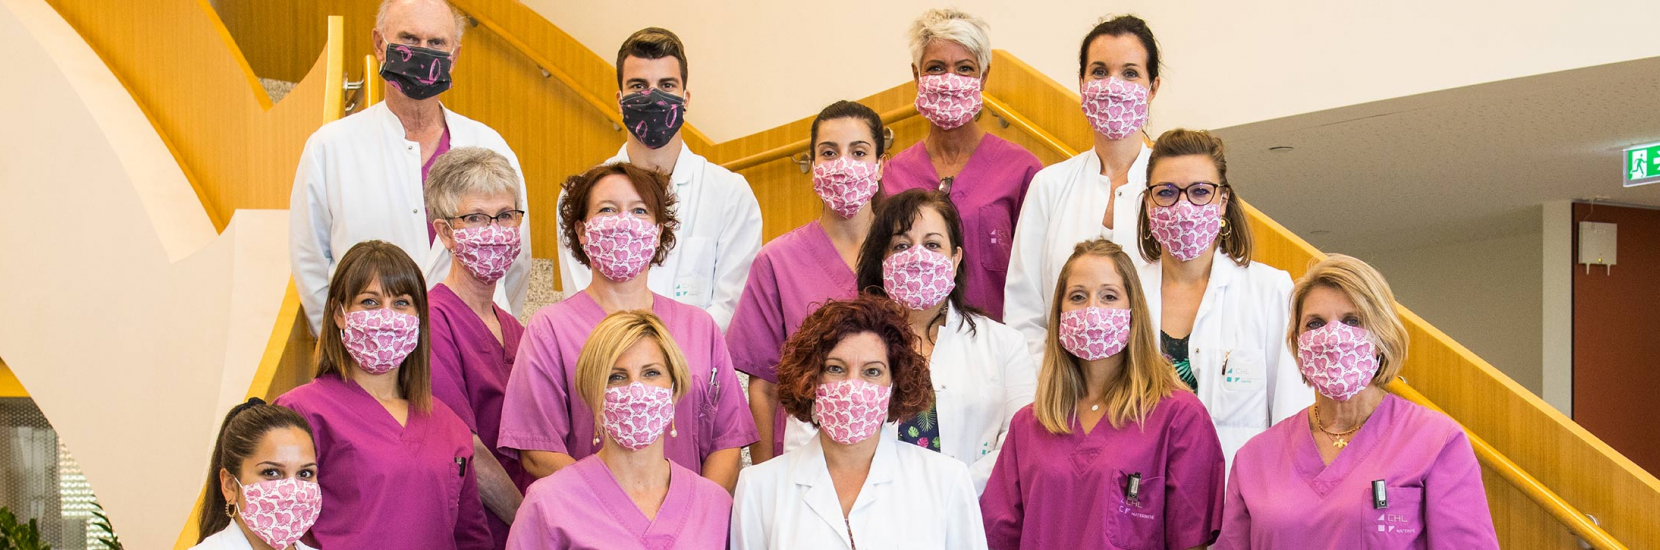 Octobre rose - Campagne de dépistage du cancer du sein